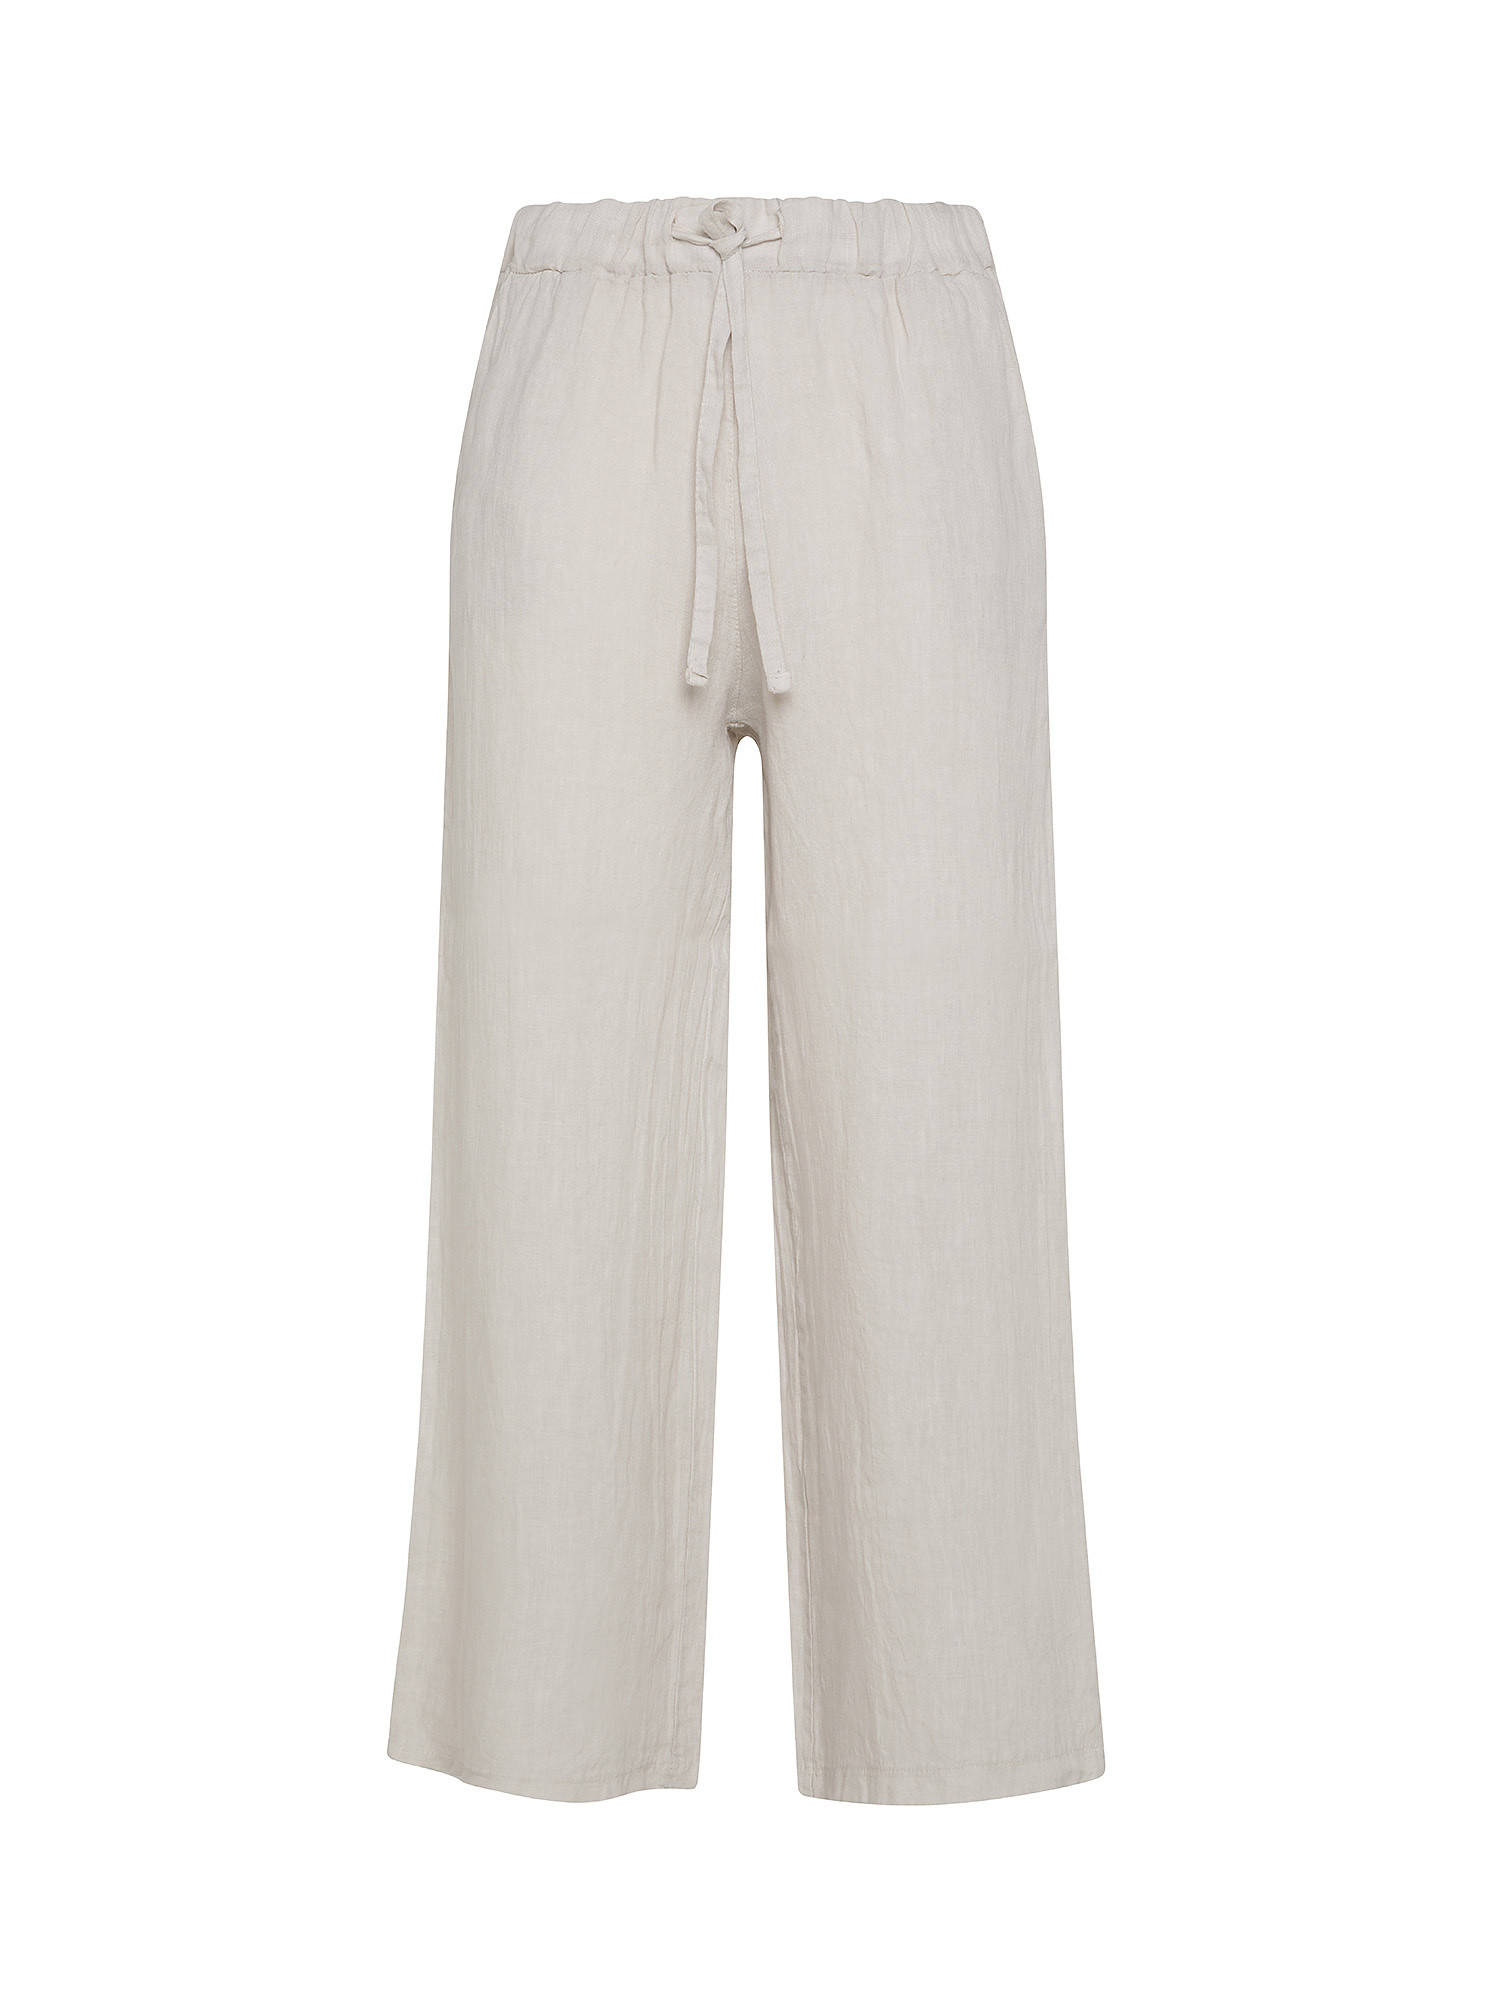 Koan - Wide linen trousers, Beige, large image number 0